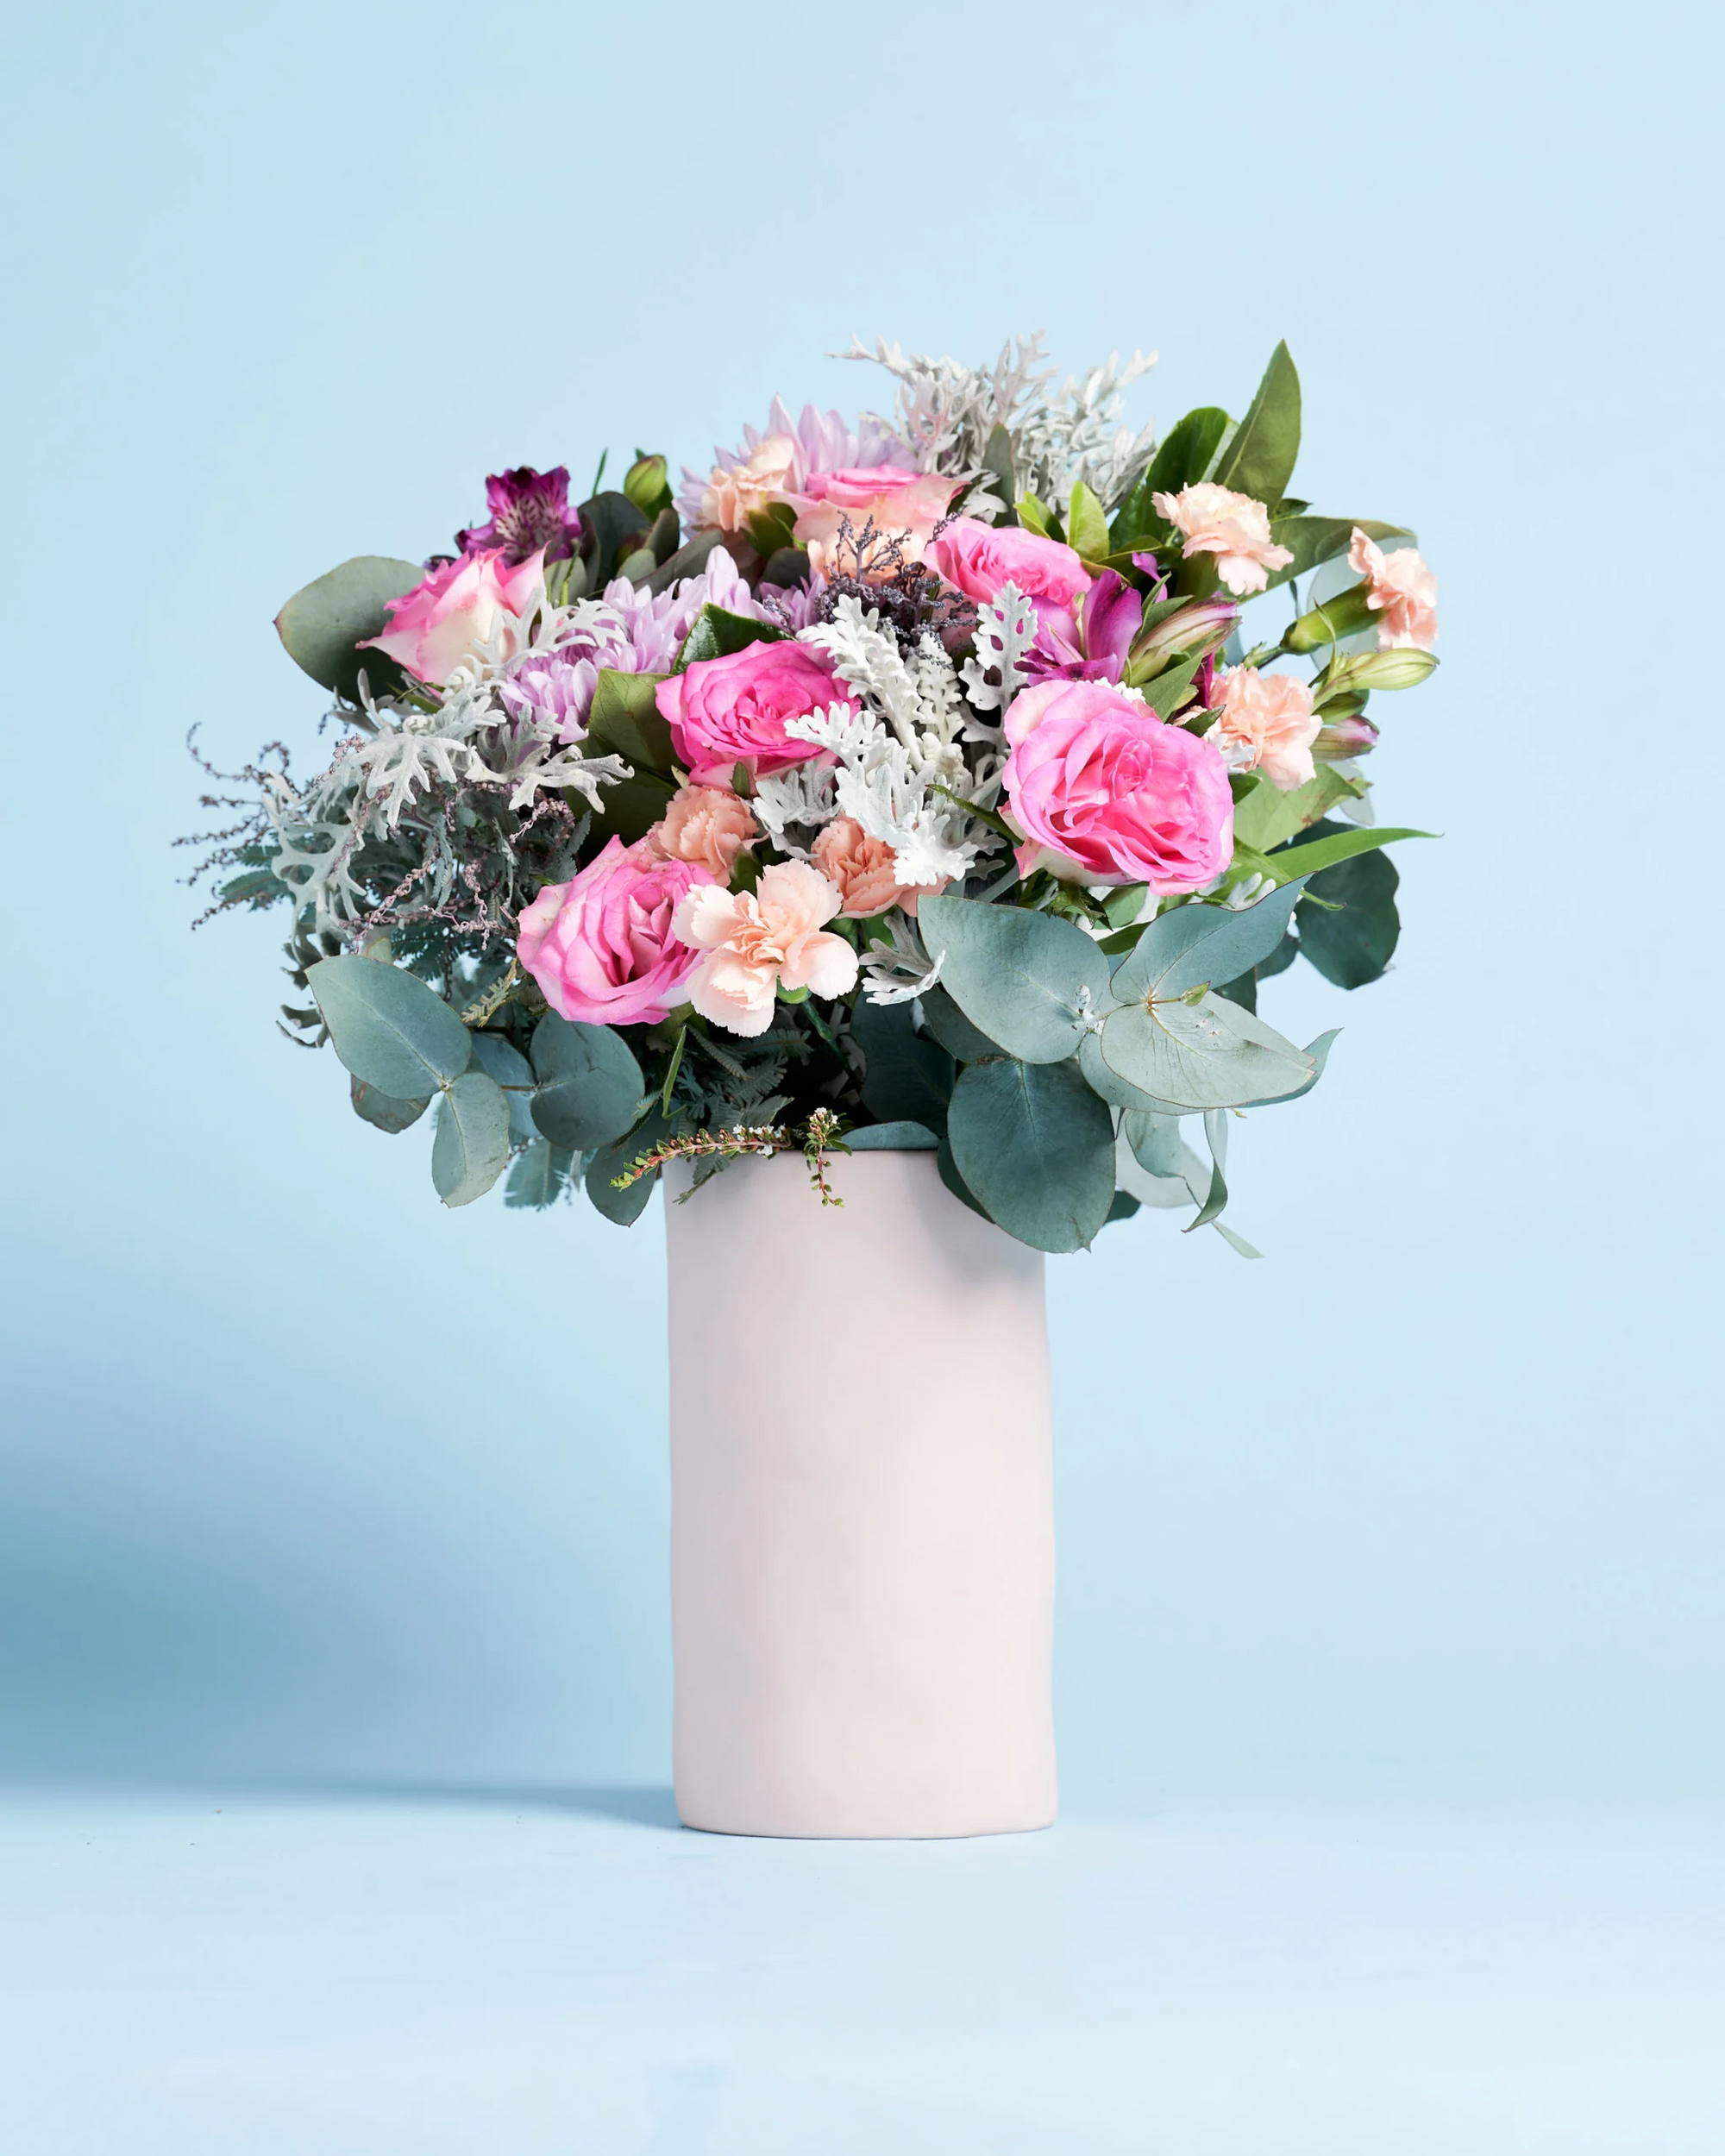 Flowers + Vase